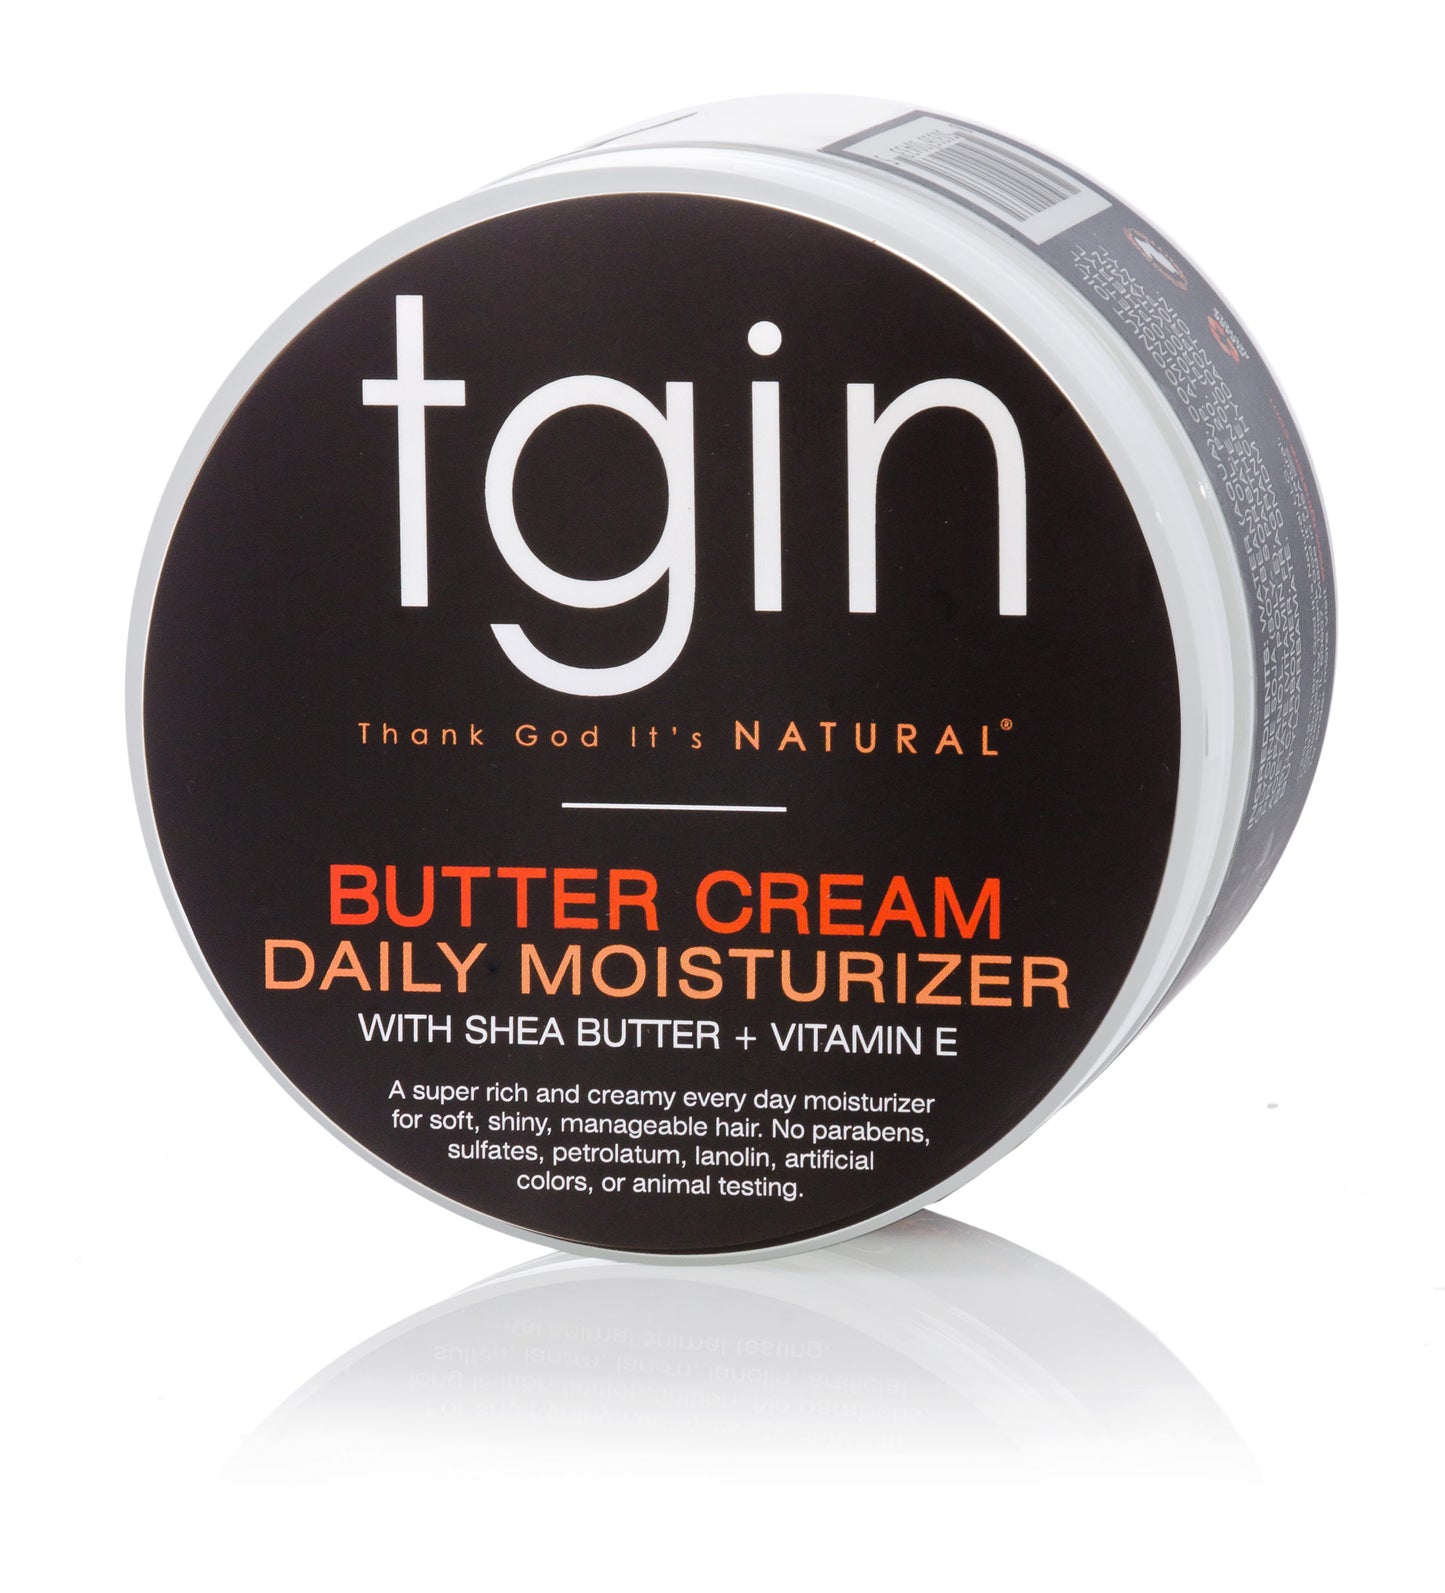 tgin Butter Cream Daily Moisturizer for Natural Hair – 12oz